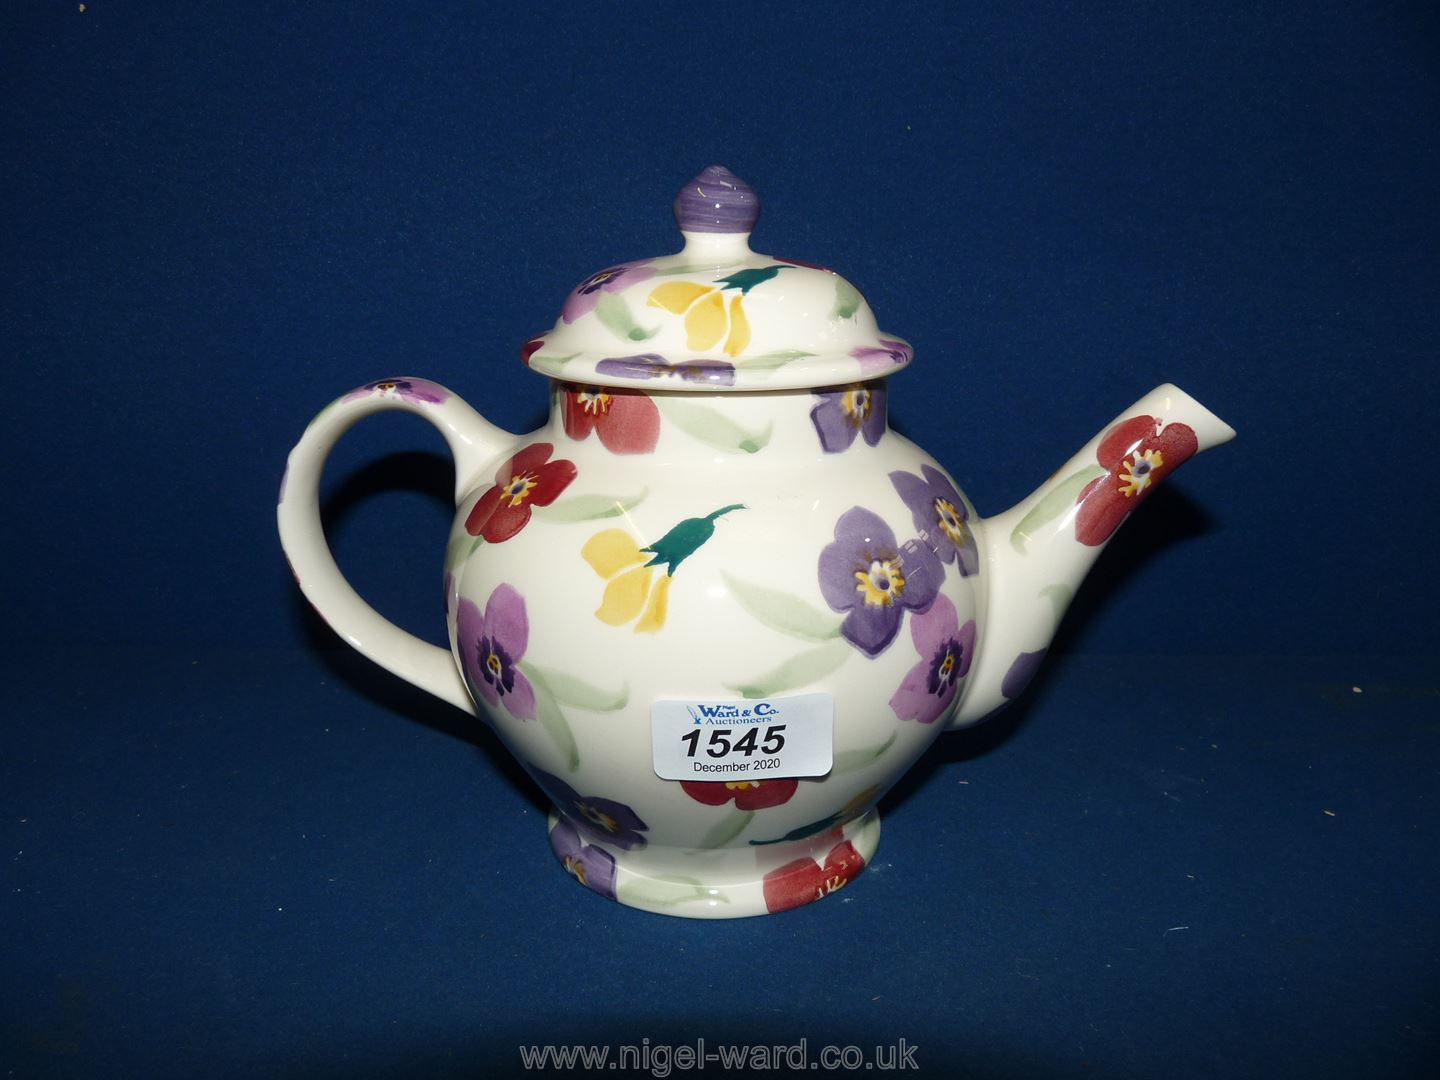 A pristine Emma Bridgewater teapot in wallflower pattern.